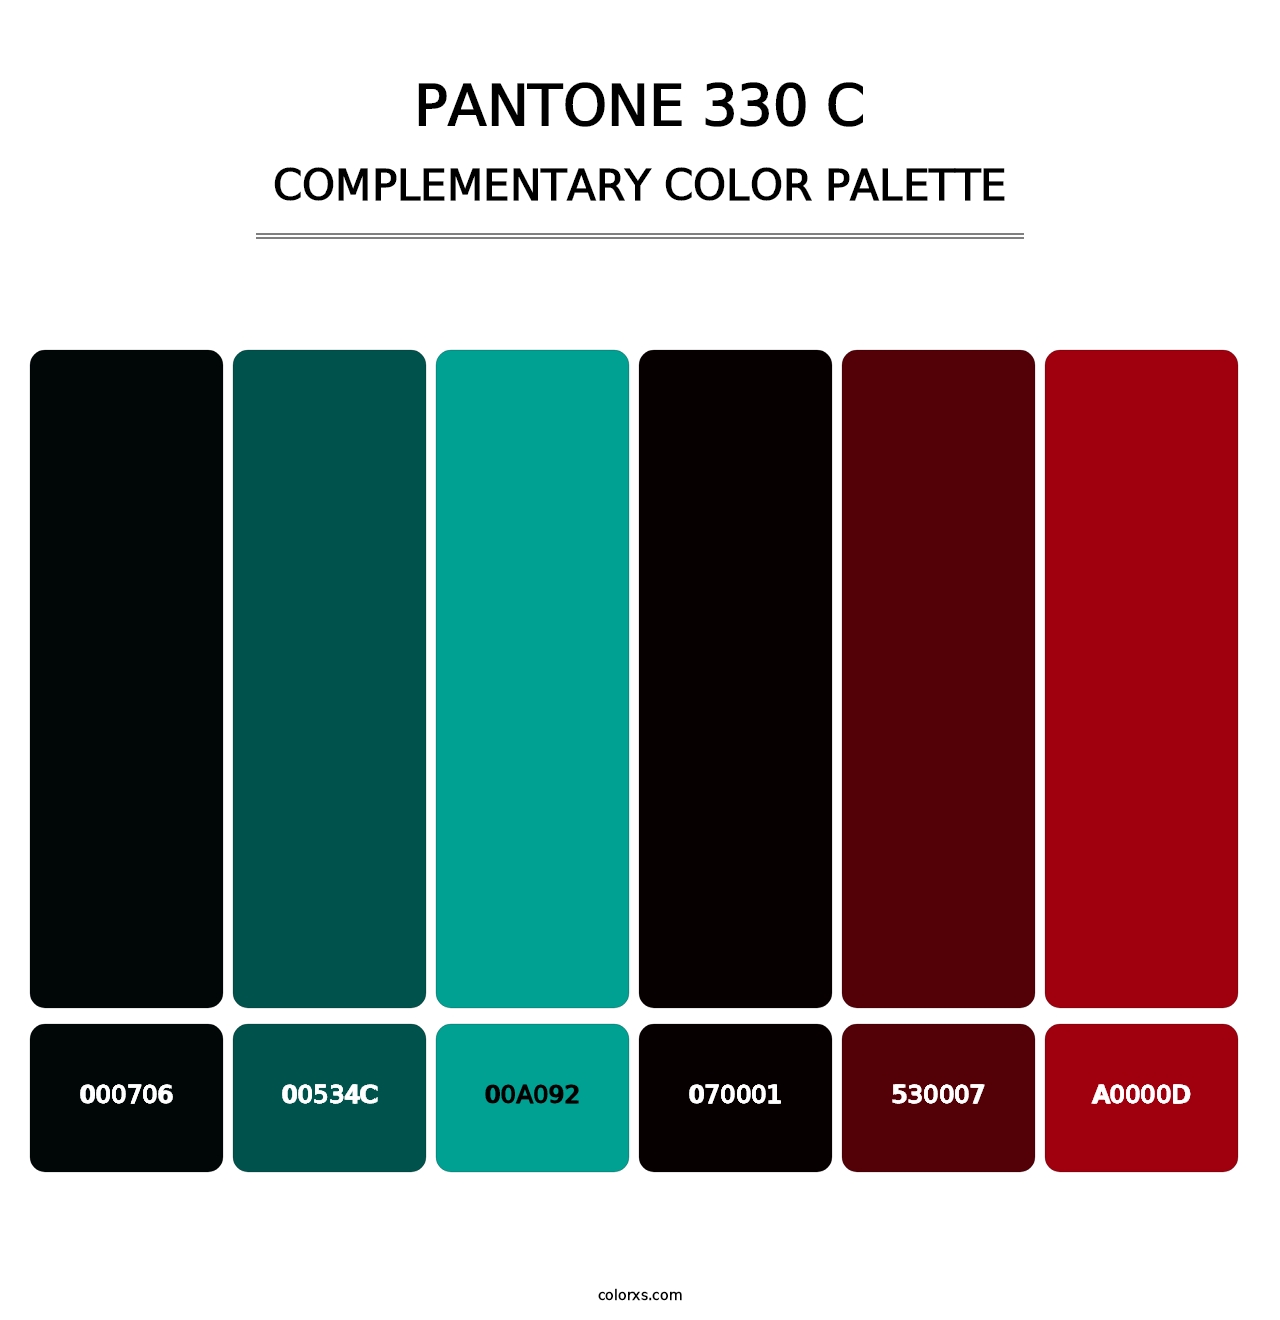 PANTONE 330 C - Complementary Color Palette